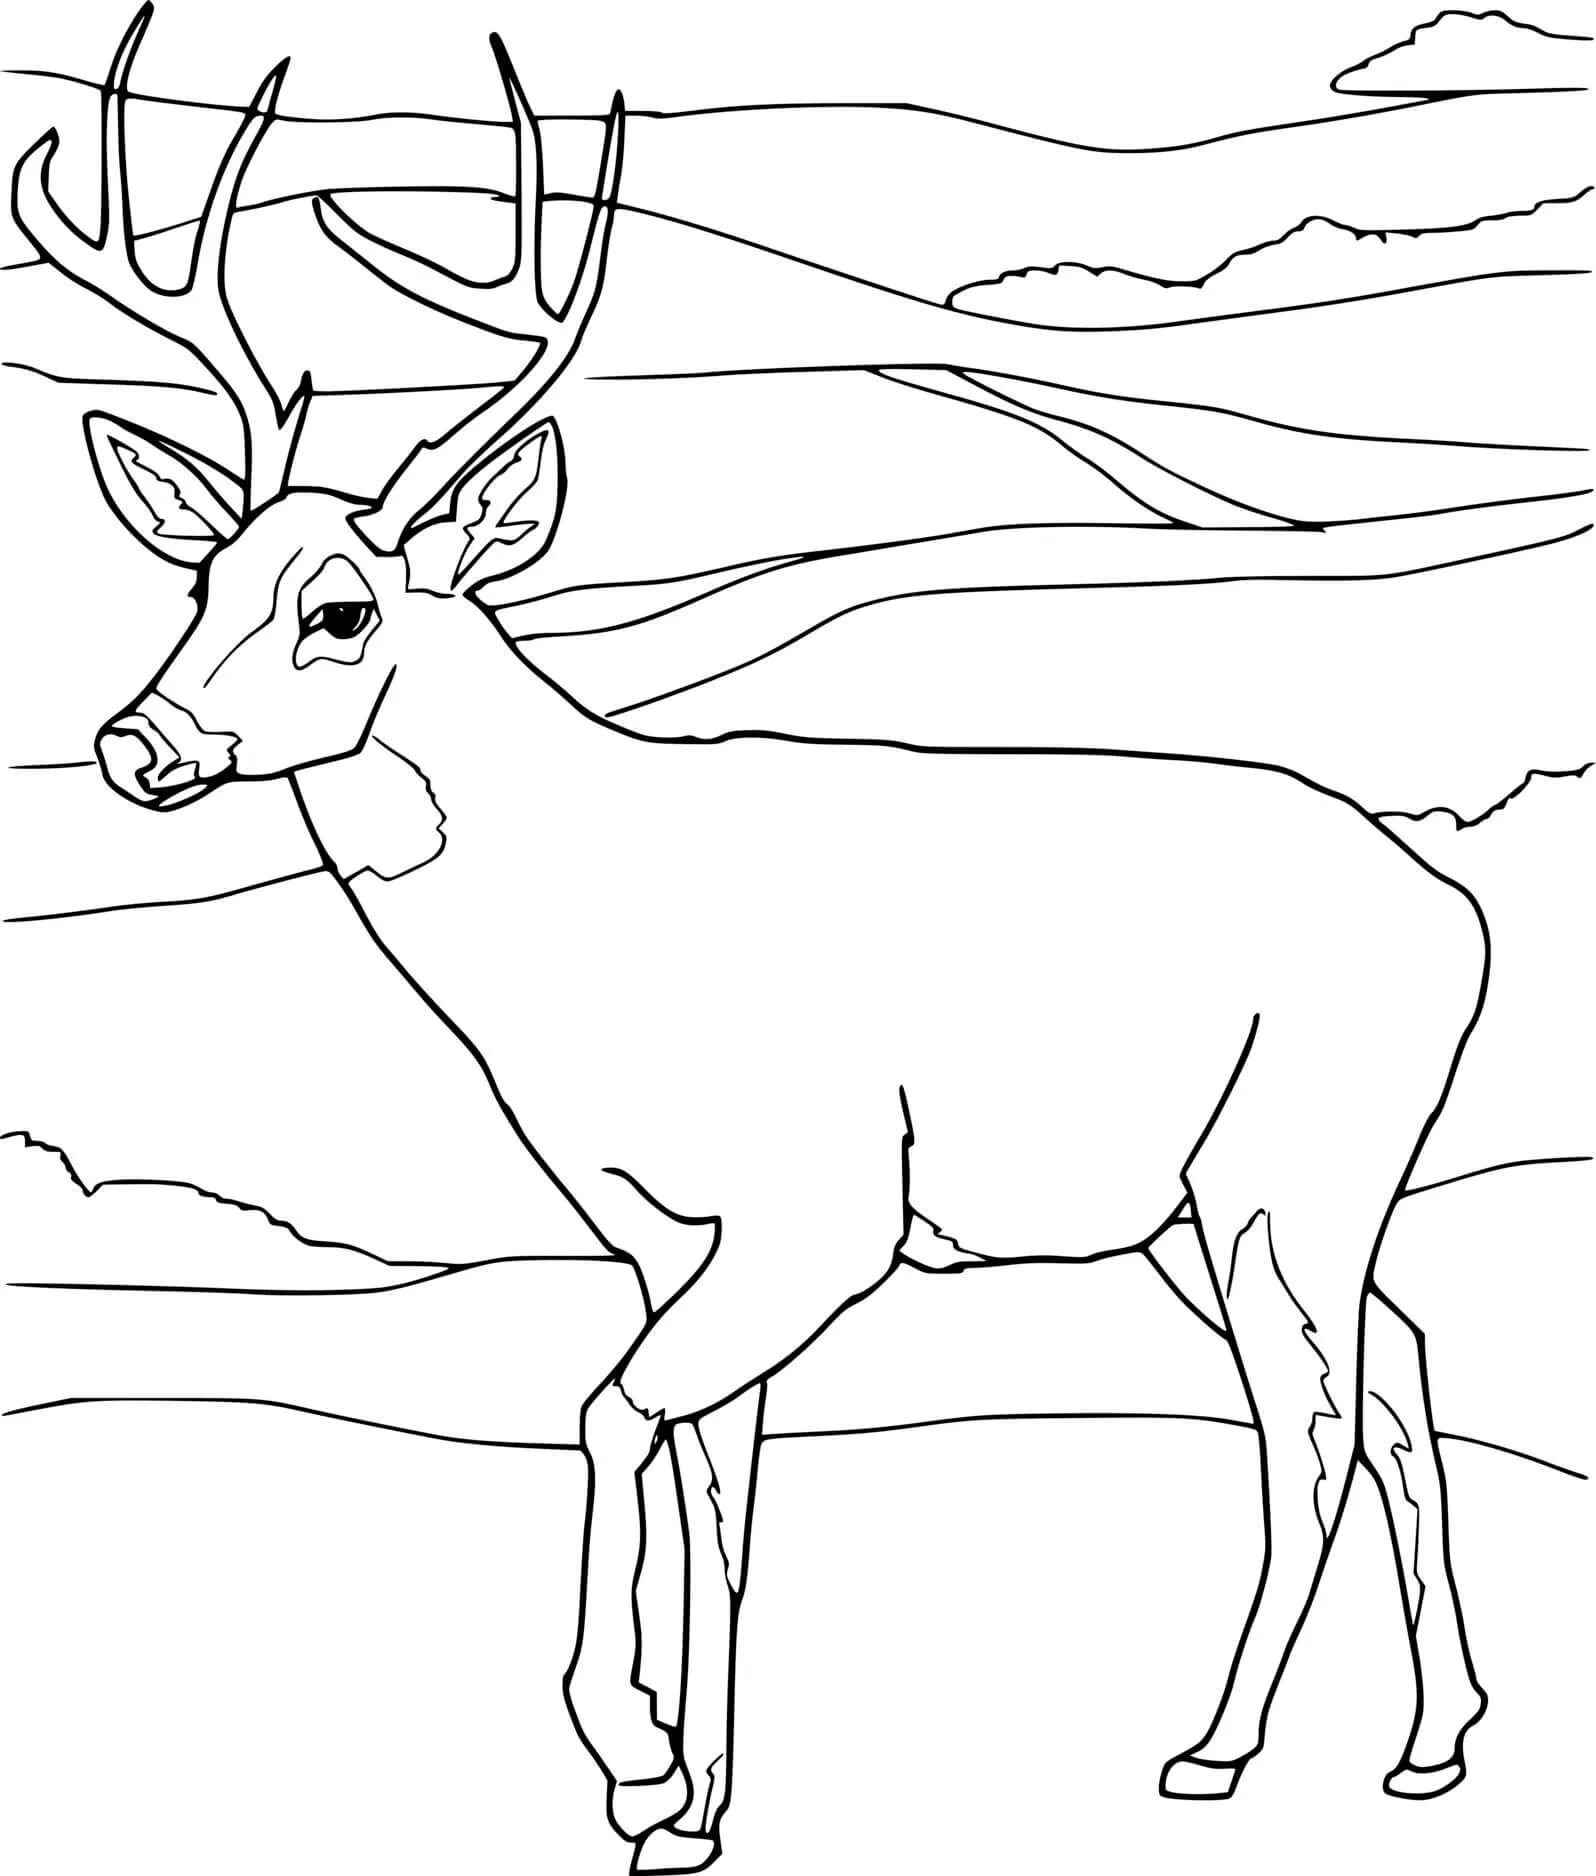 Coloring book generous deer for children 6-7 years old